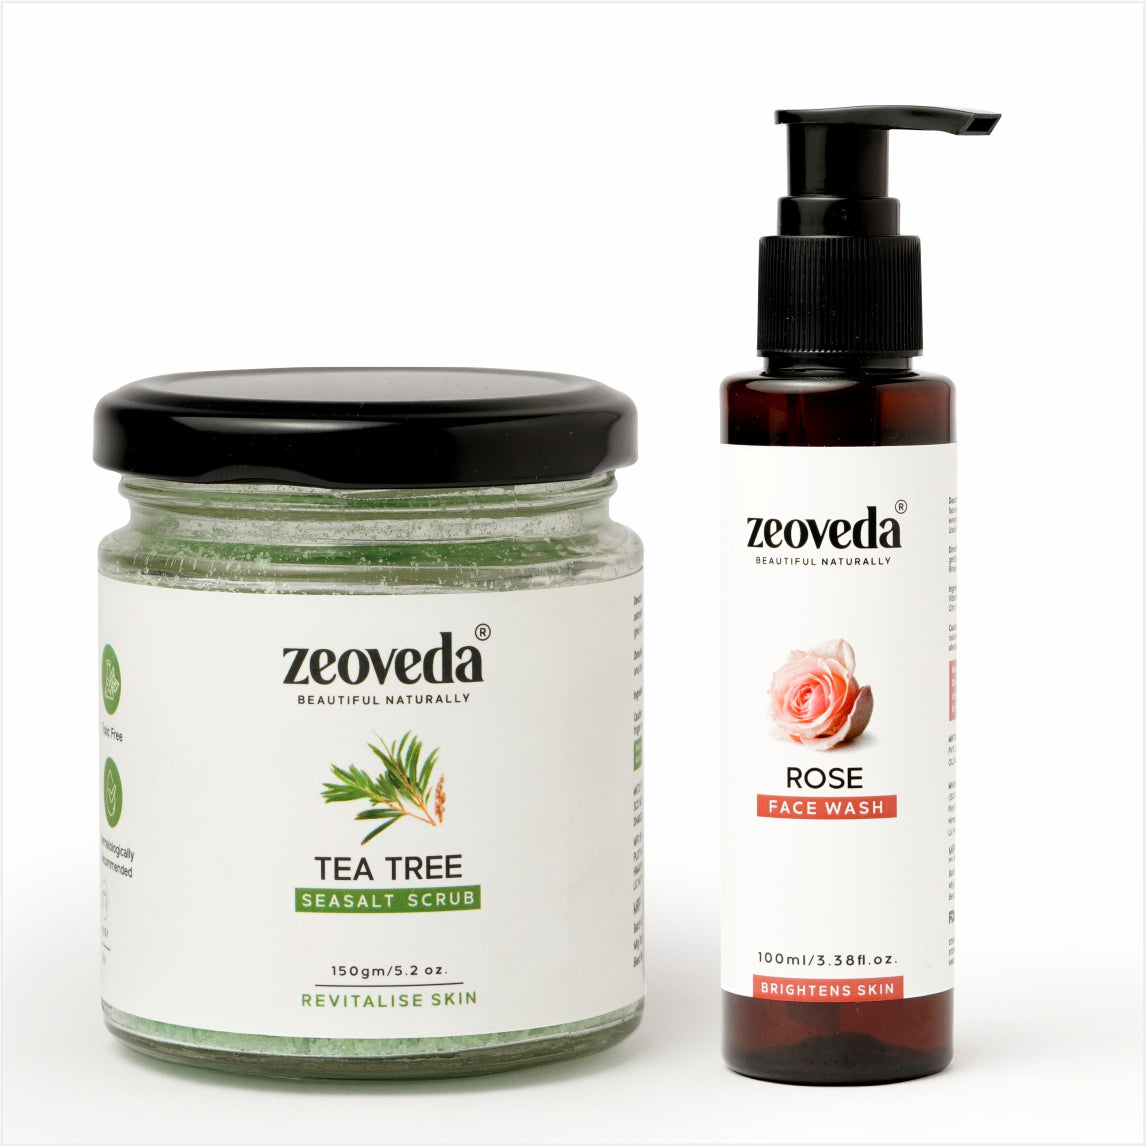 Tea Tree Scrub(150GM) + Rose Face Wash(100ML) Combo For Spotless Skin